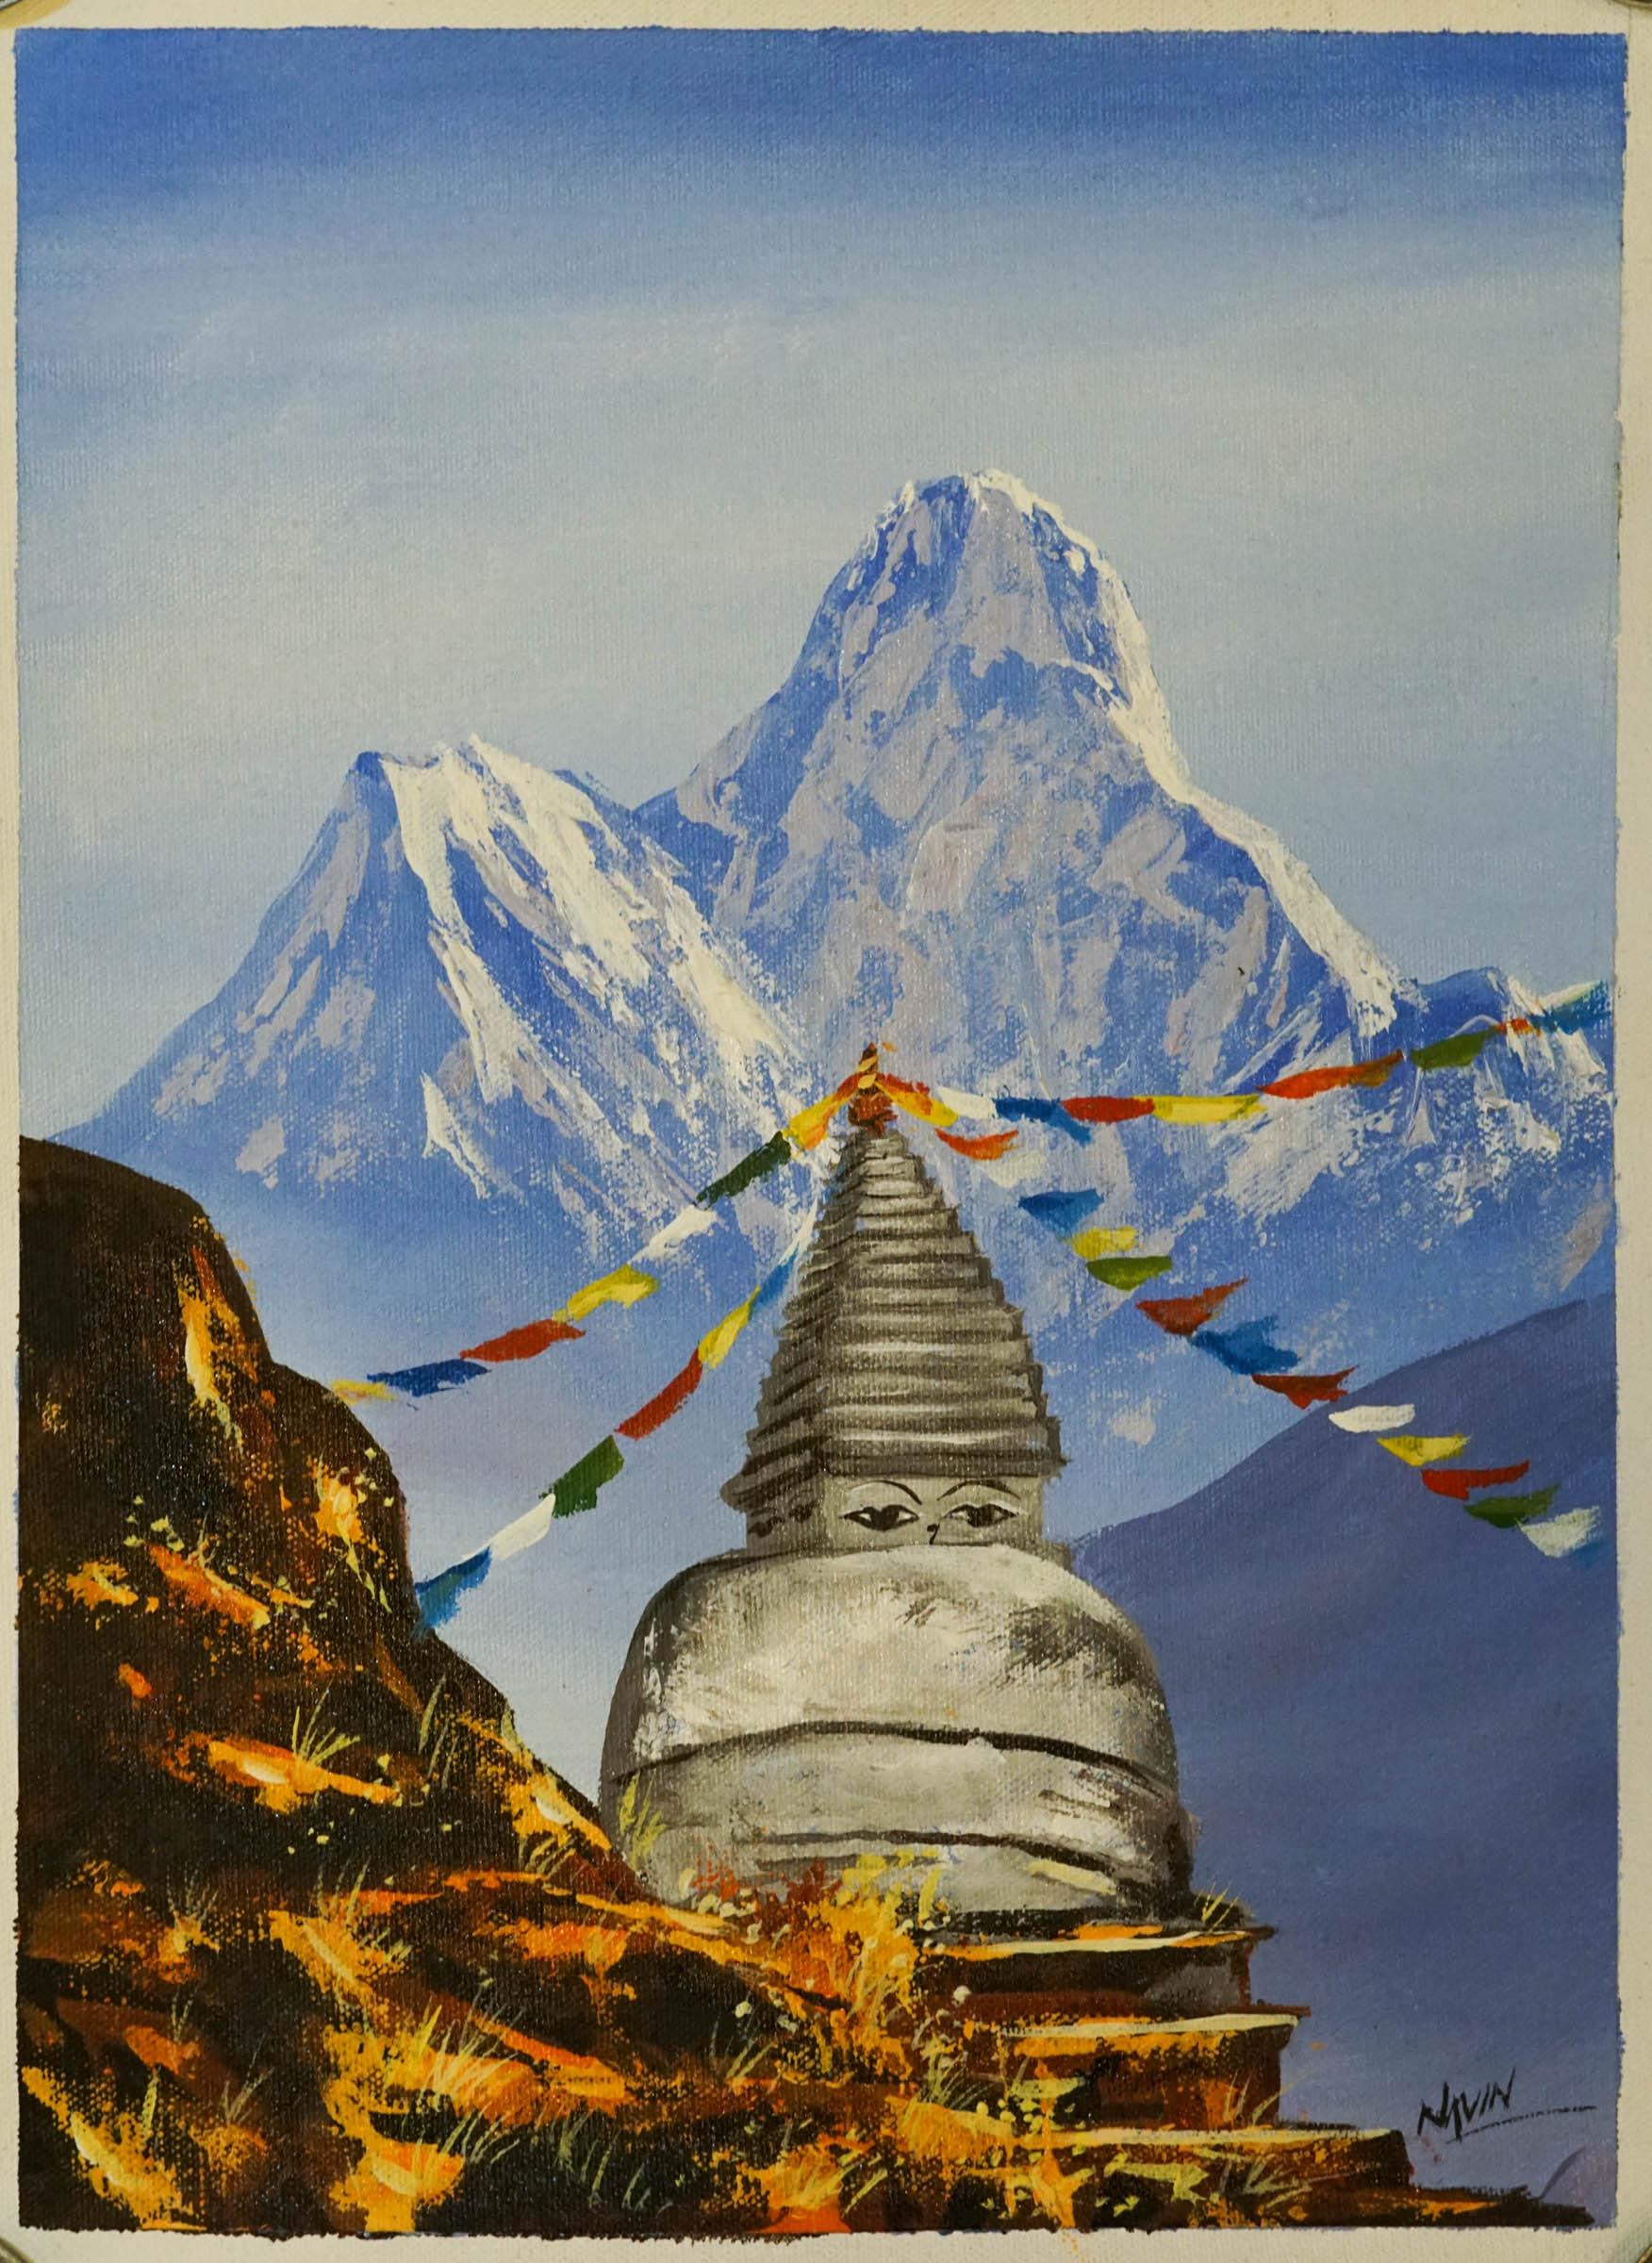 Tenzin Norgay Stupa Landscape painting with Himalayas range - Himalayas Shop